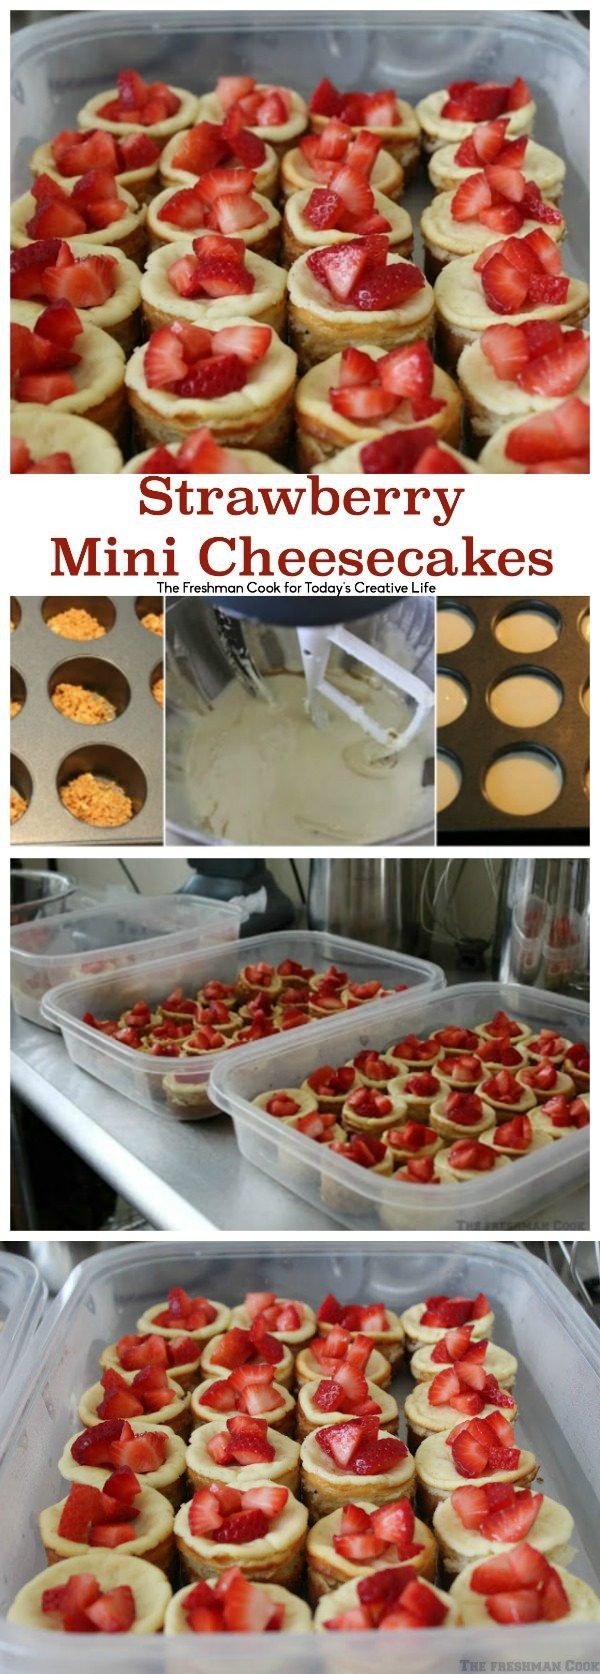 Strawberry Mini Cheesecakes